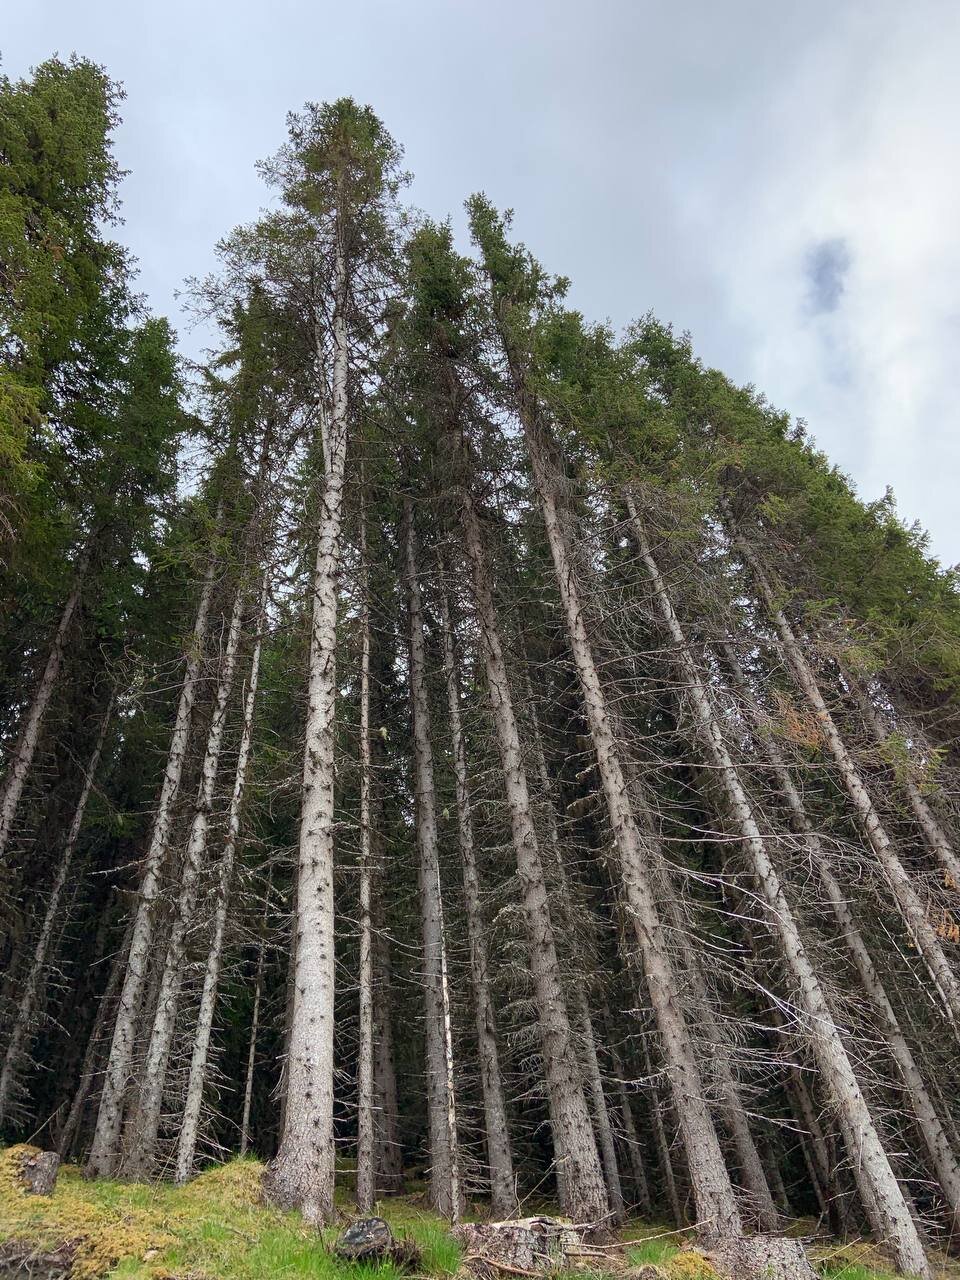 Planted Spruce in Folkeparken, Harstad, Norway. Submitted by Ragnheidur.